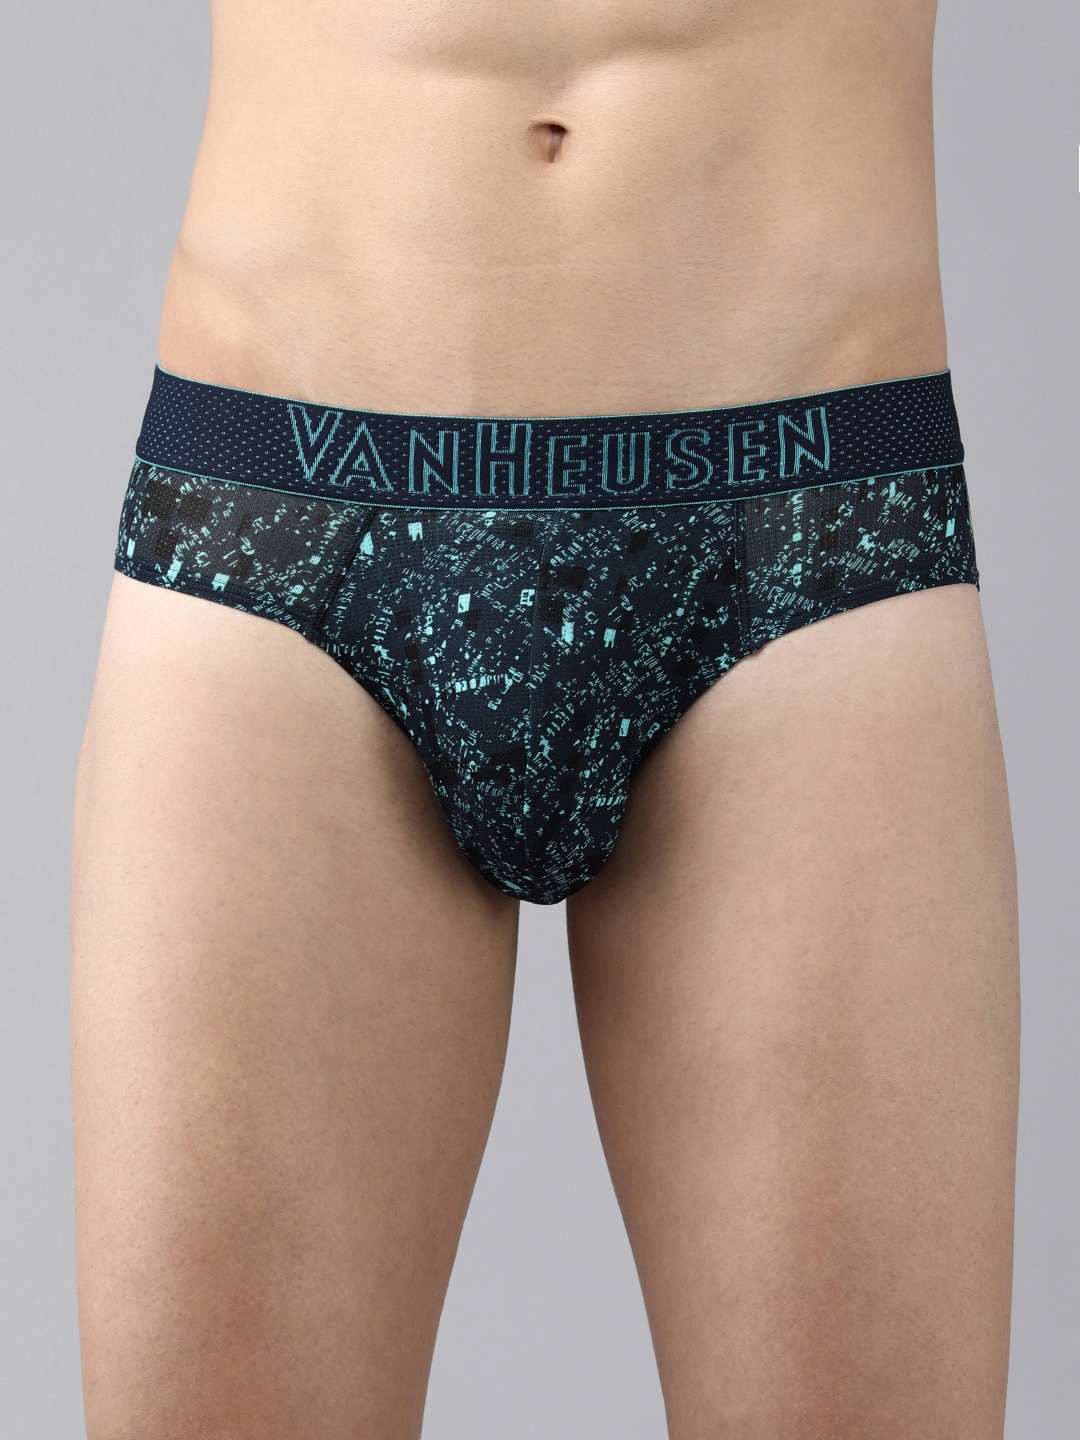 Van Heusen Innerwear & Underwear for Men sale - discounted price